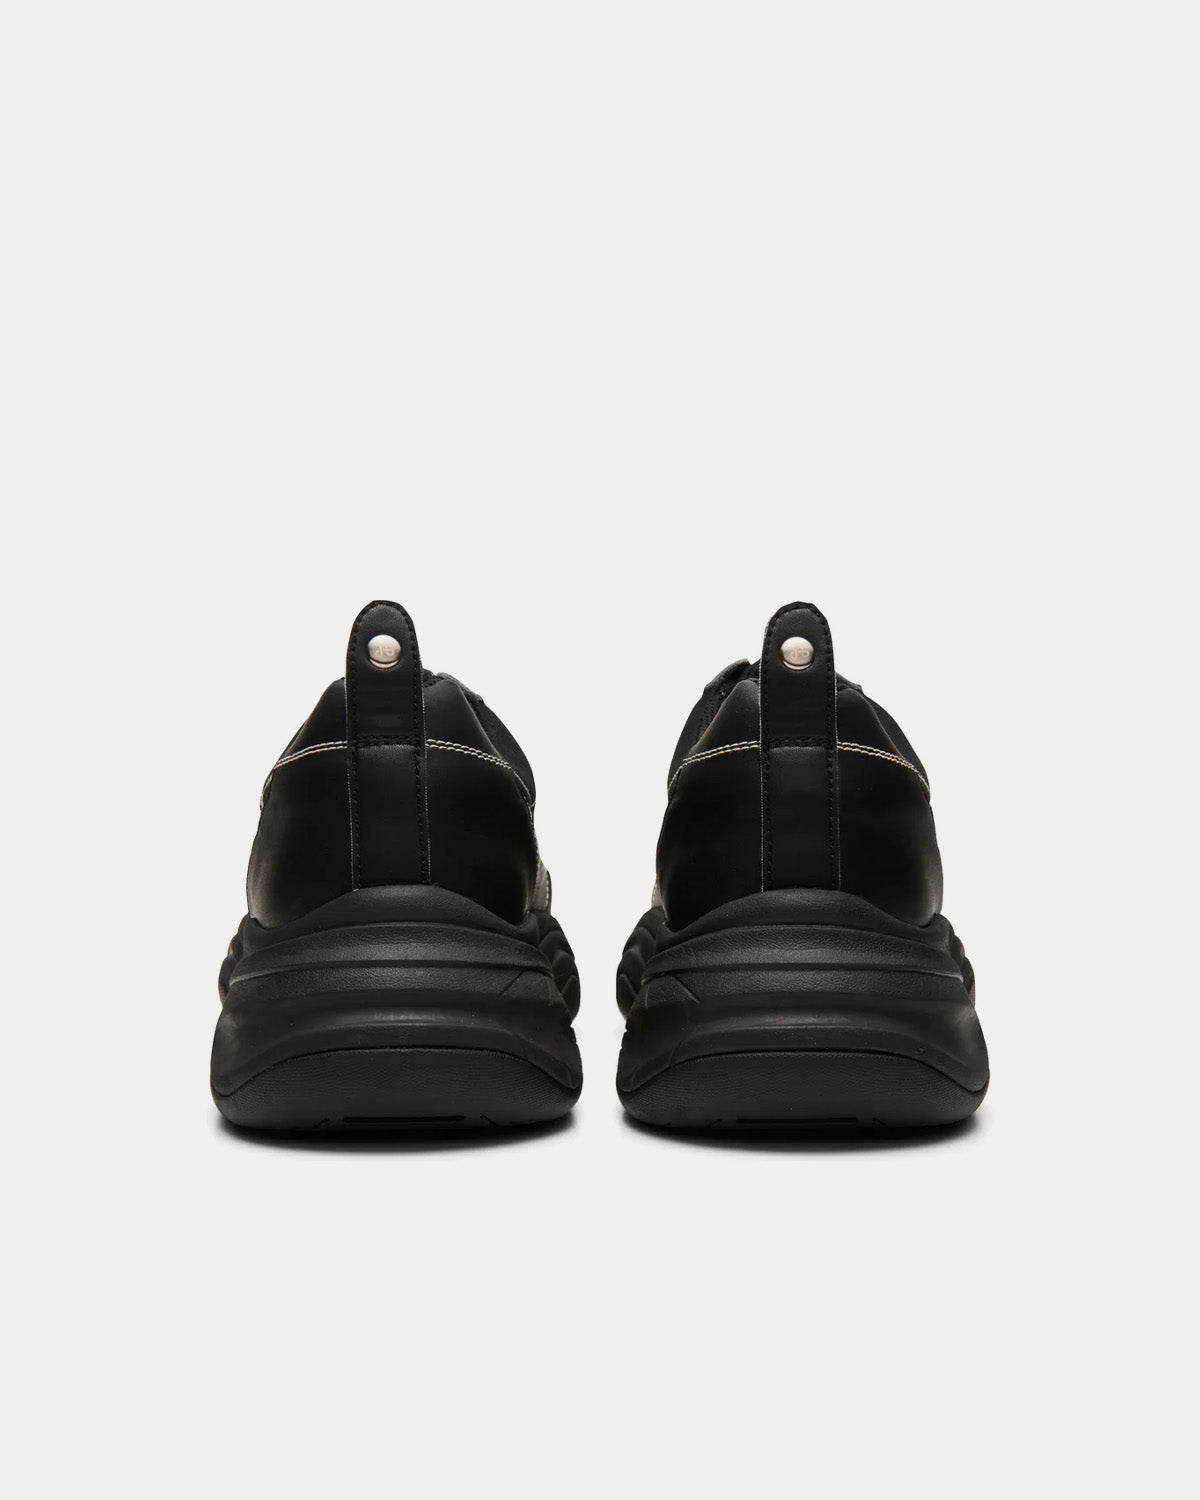 OAO - Sunlight Black Low Top Sneakers